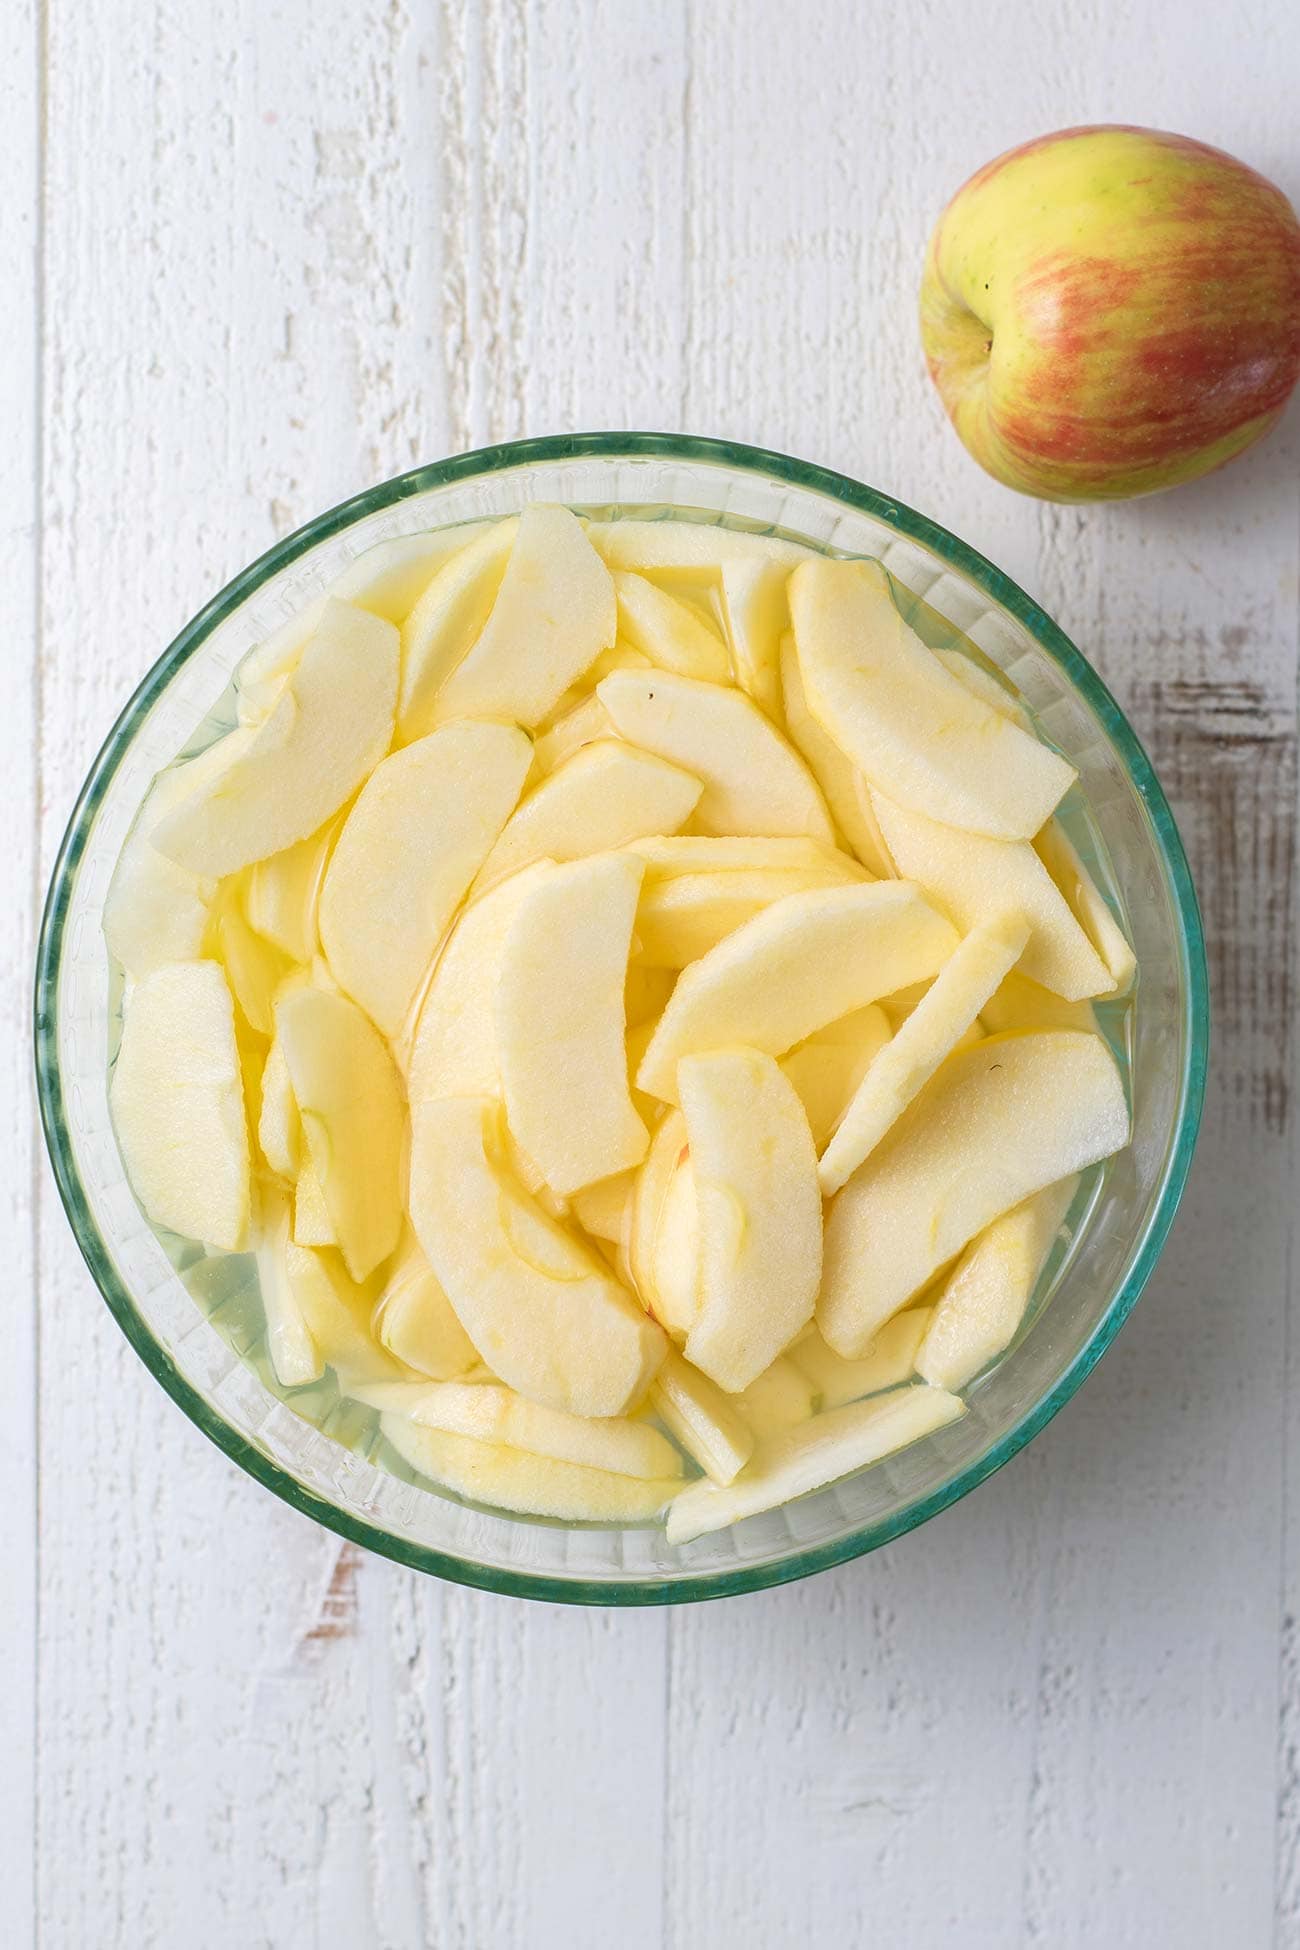 Apple slices shown soaking in lemon water.